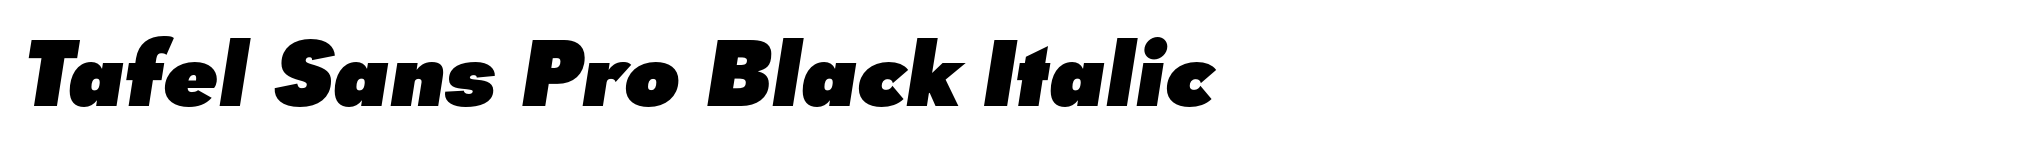 Tafel Sans Pro Black Italic image